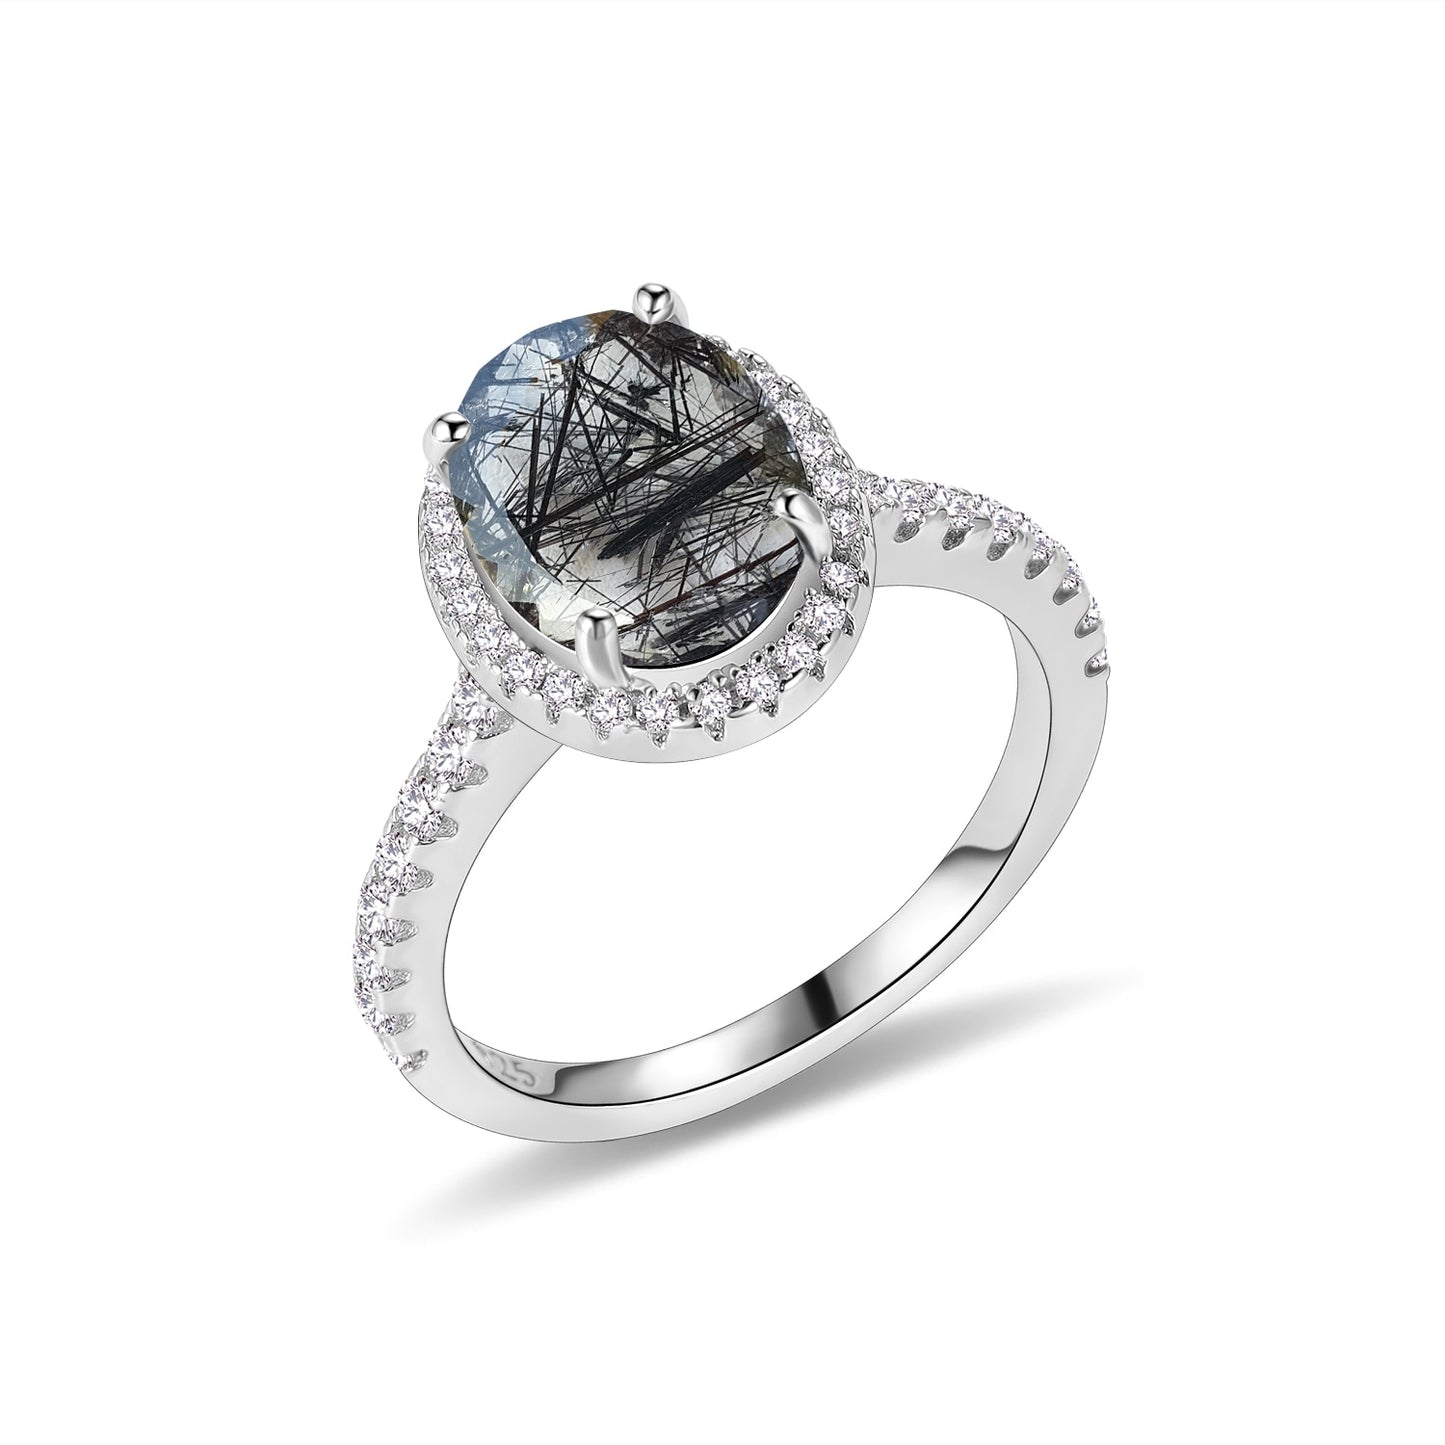 GEM'S BALLET 6X8mm Oval Natural Black Rutilated Quartz Gemstone Wedding Engagement Ring in 925 Sterling Silver Gift For Her Rutilated Quartz - S|6X8mm